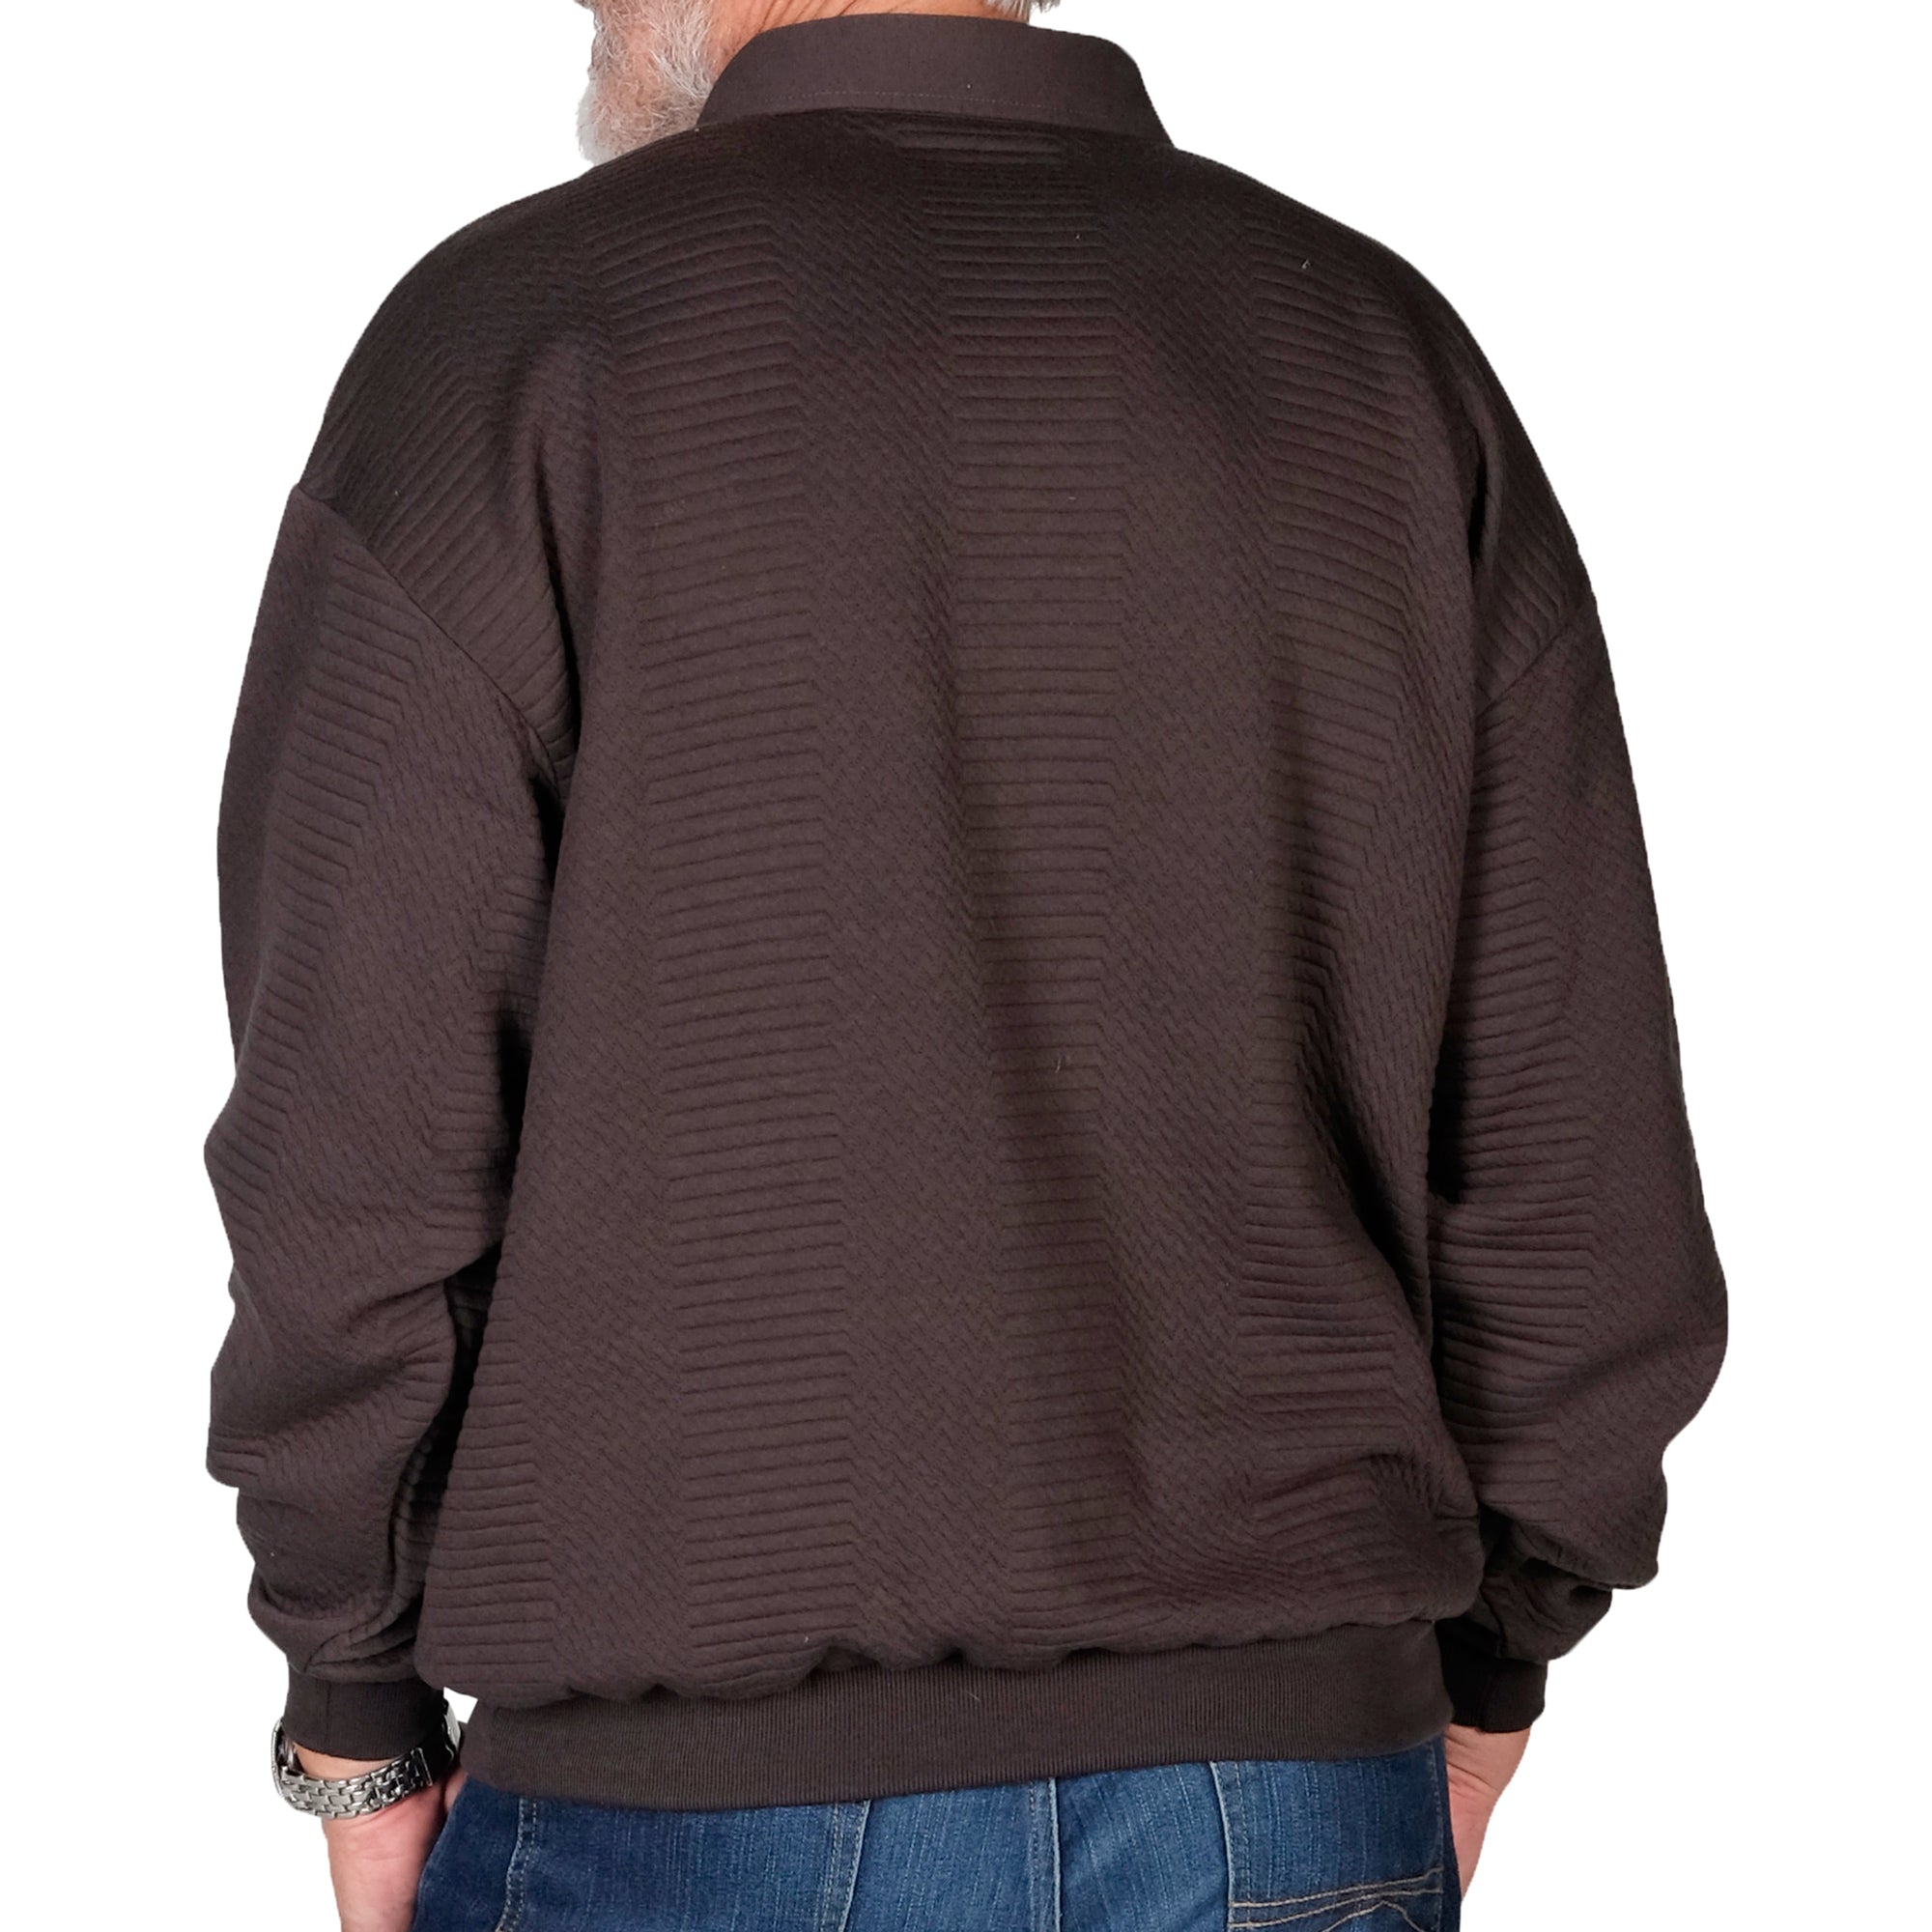 LD Sport Solid Textured Long Sleeve Banded Bottom Shirt 6094-950 Black